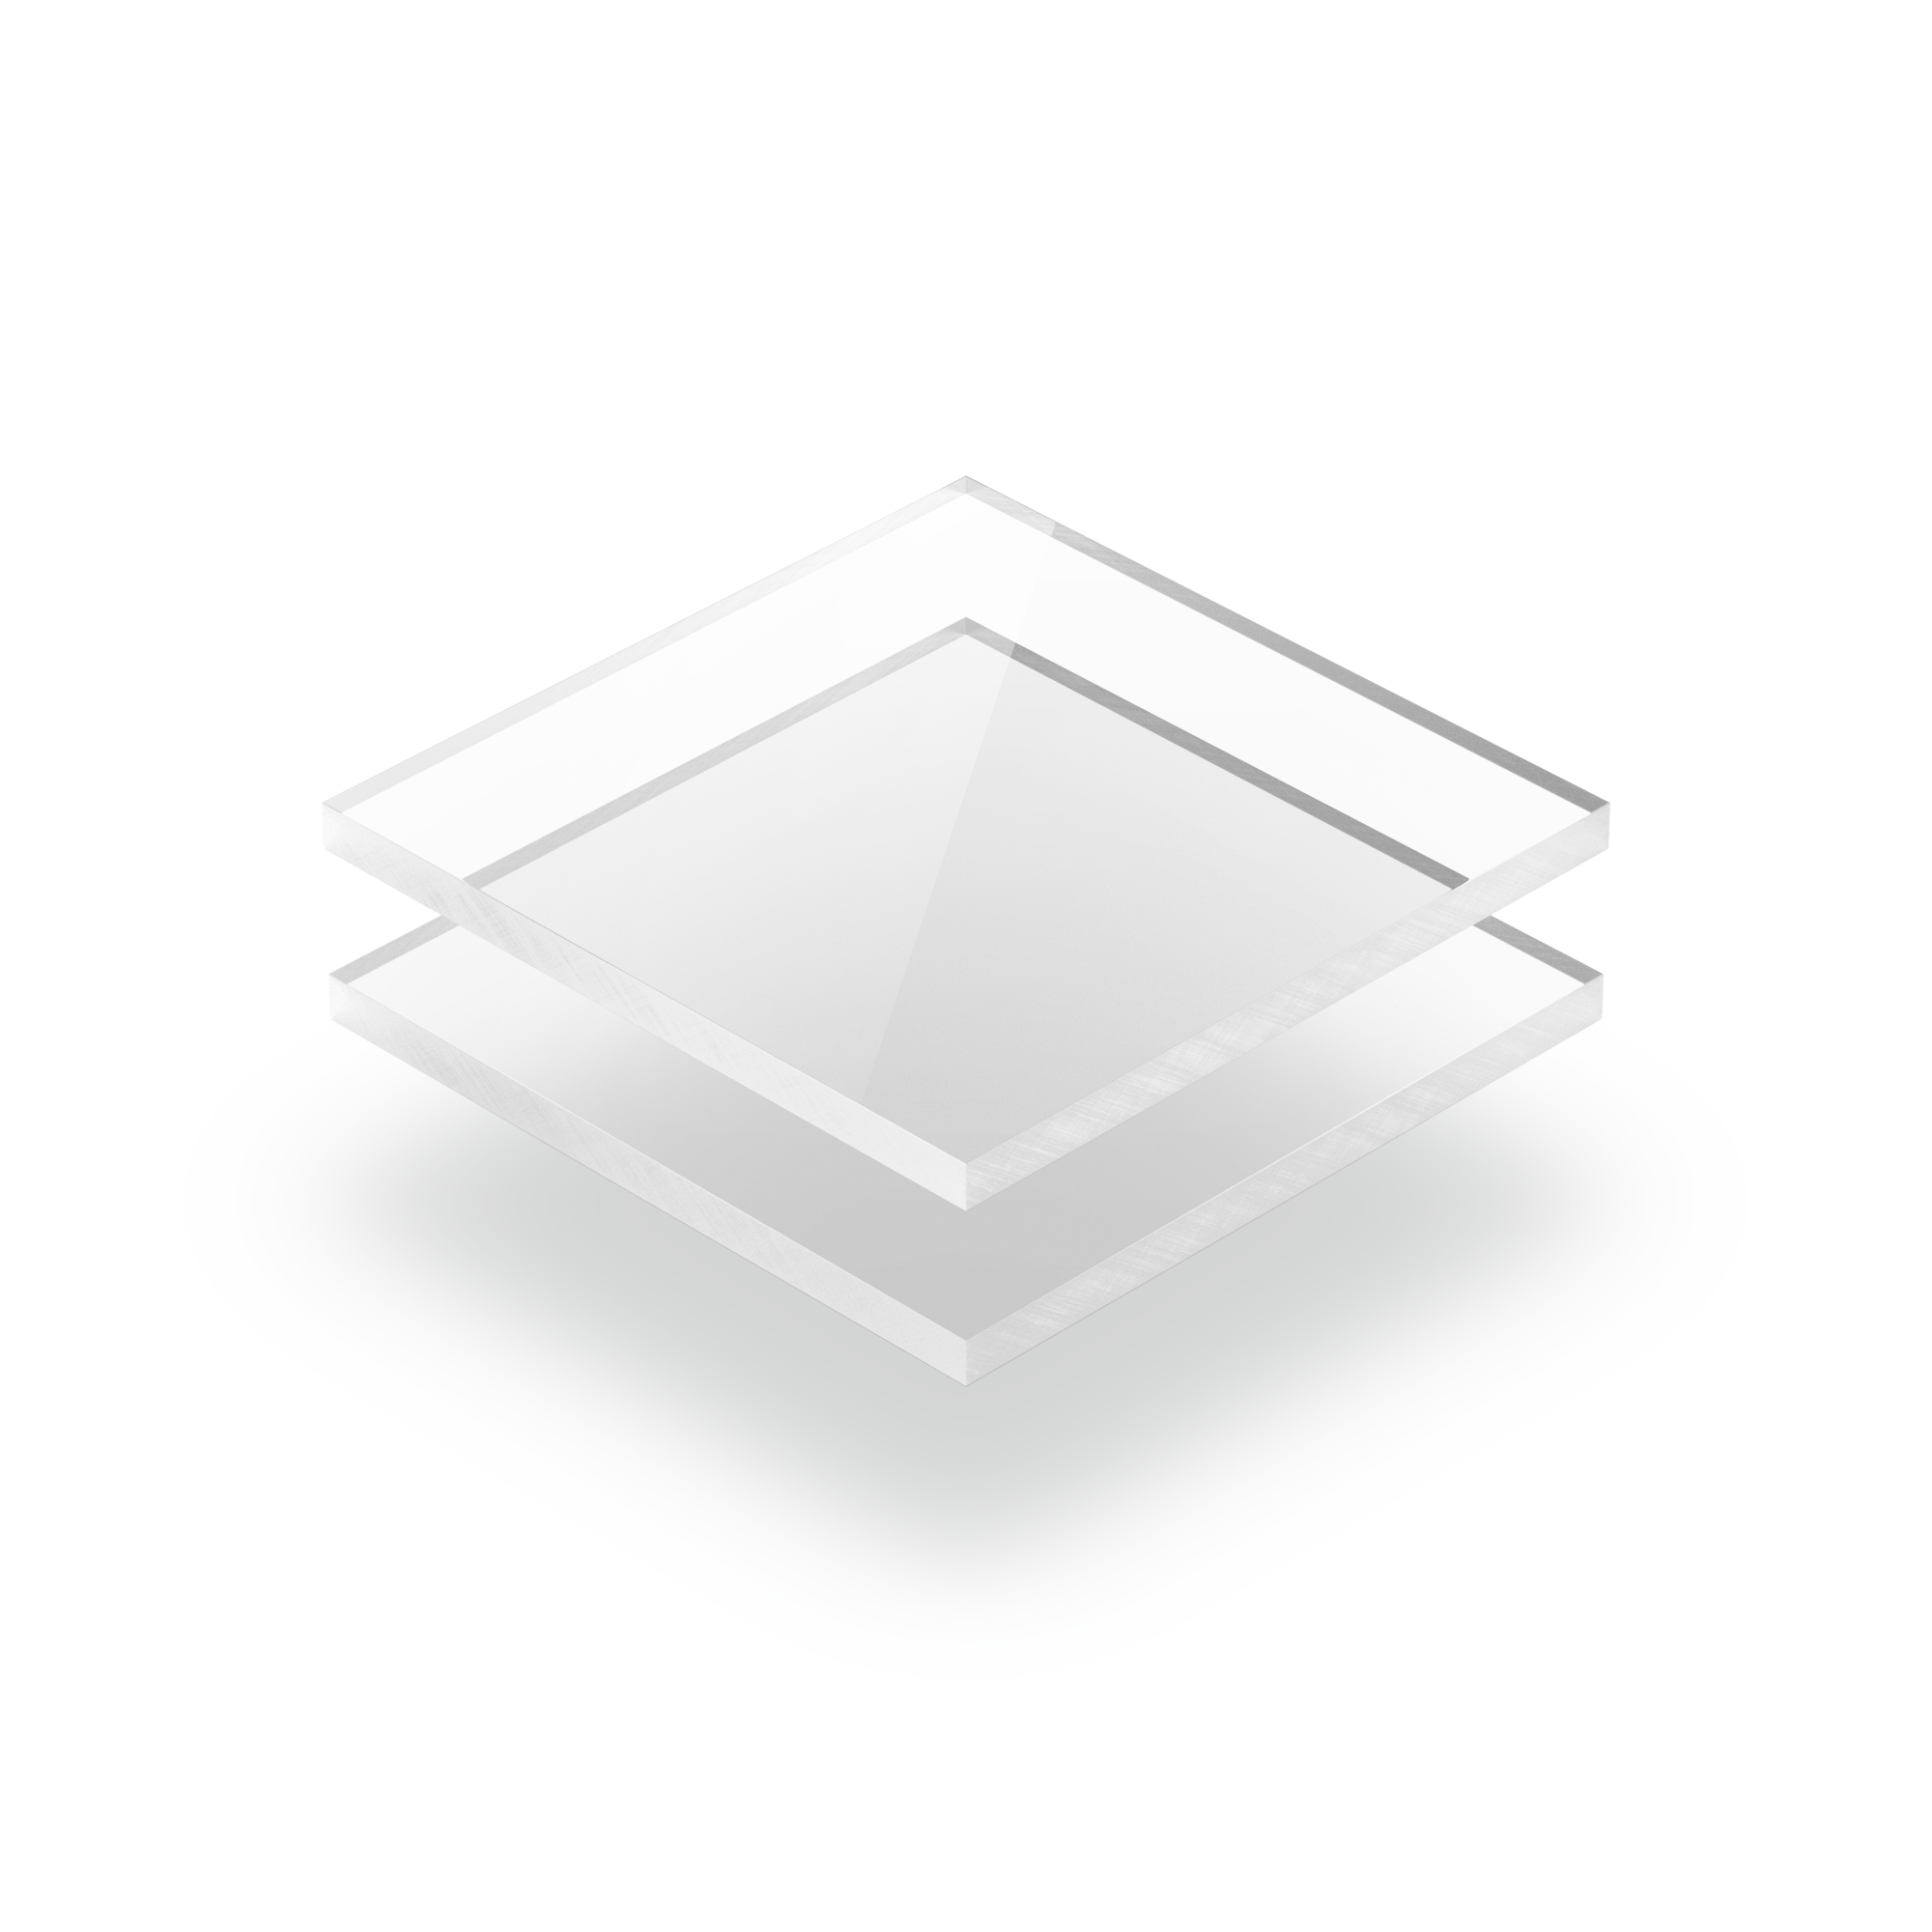 POLIVER Plexiglass Vetro Sintetico Trasparente 100x100 cm